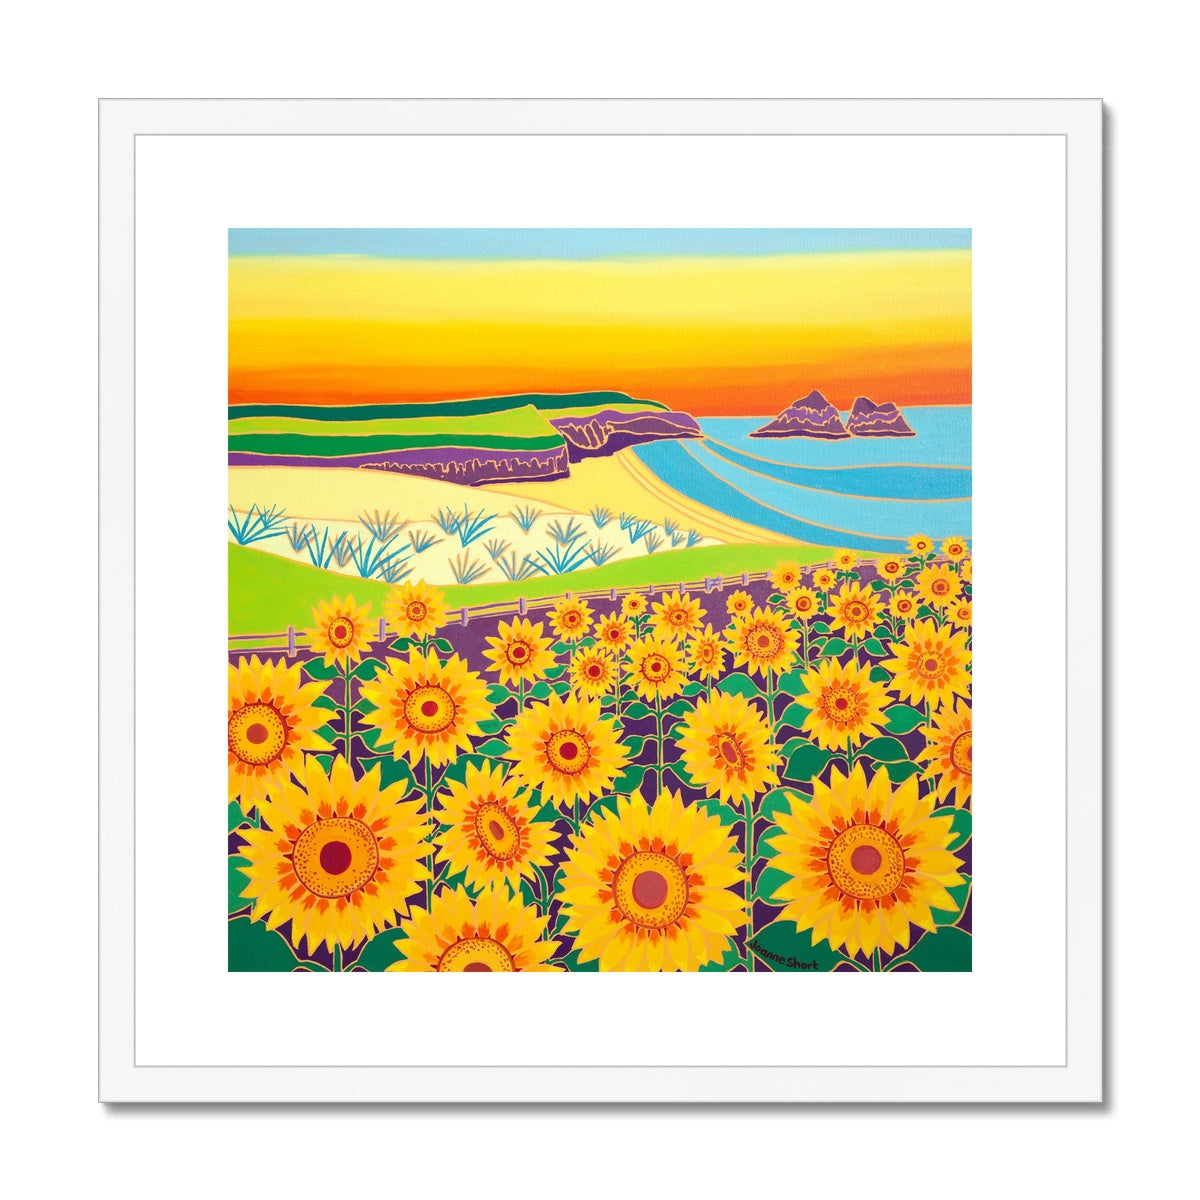 Joanne Short Framed Open Edition Cornish Fine Art Print. 'Sunny Sunflowers, Holywell Bay'. Cornwall Art Gallery